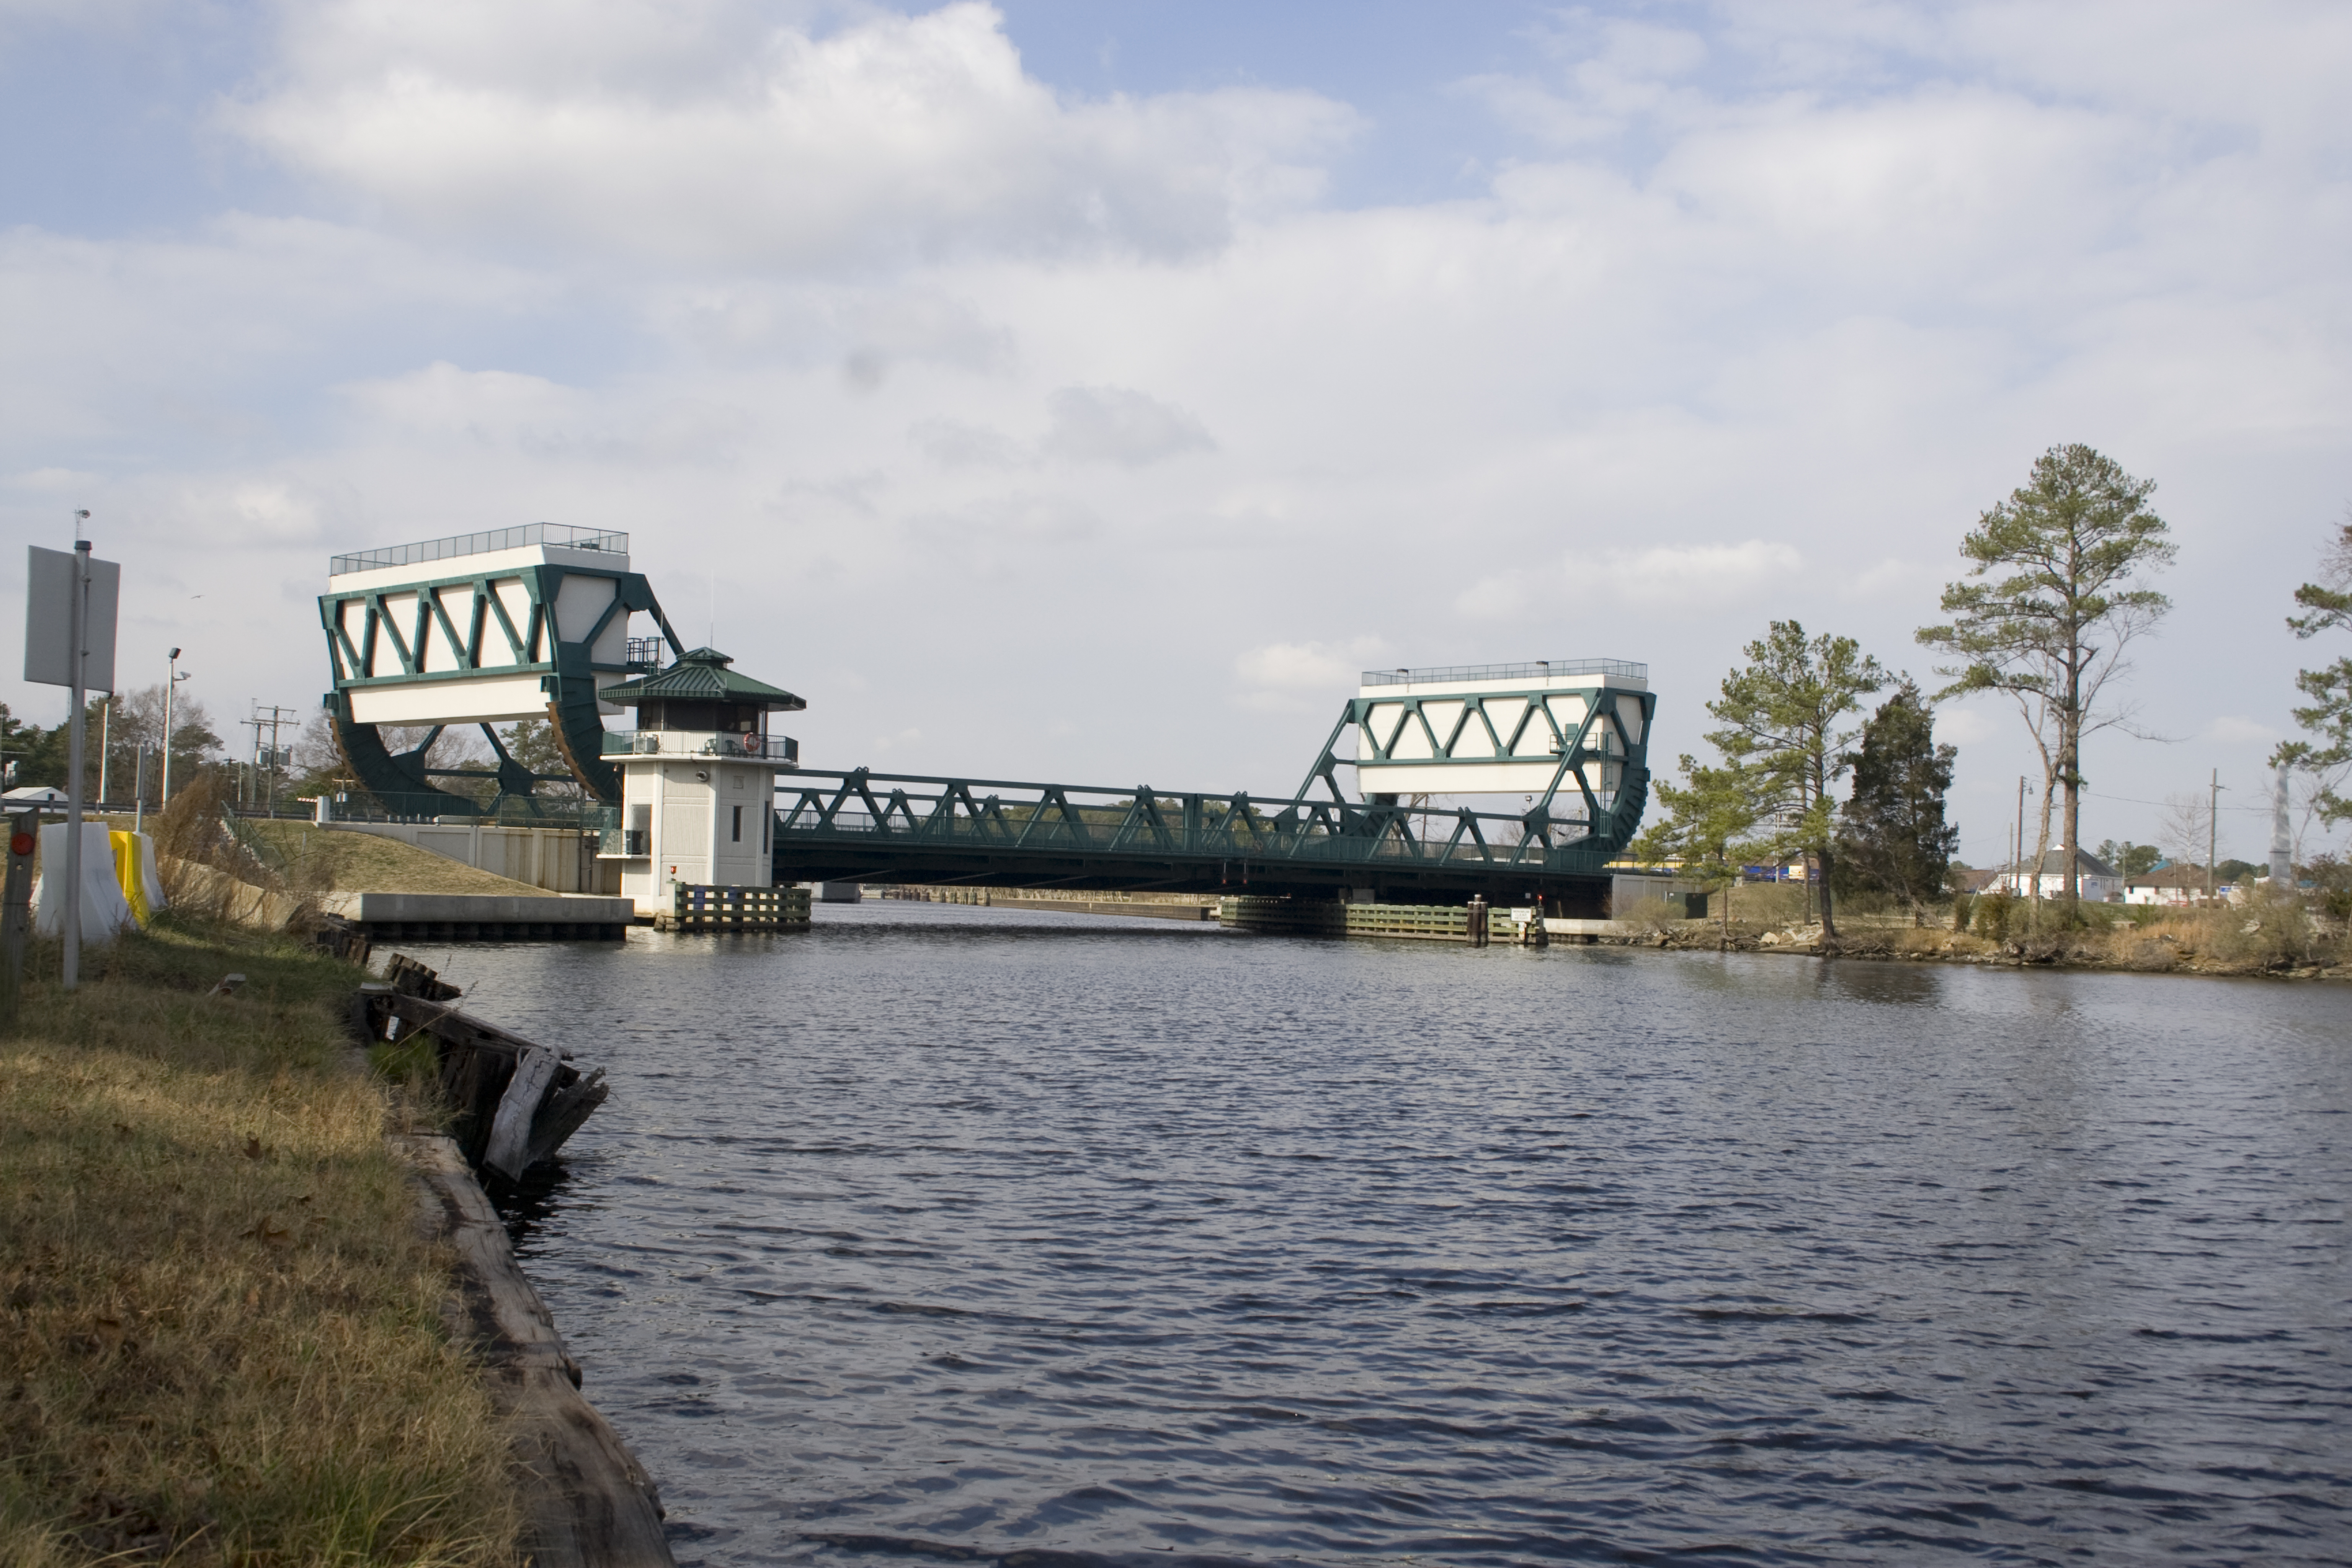 File:Bridge in Cleveland, Ohio.jpg - Wikipedia, the free encyclopedia